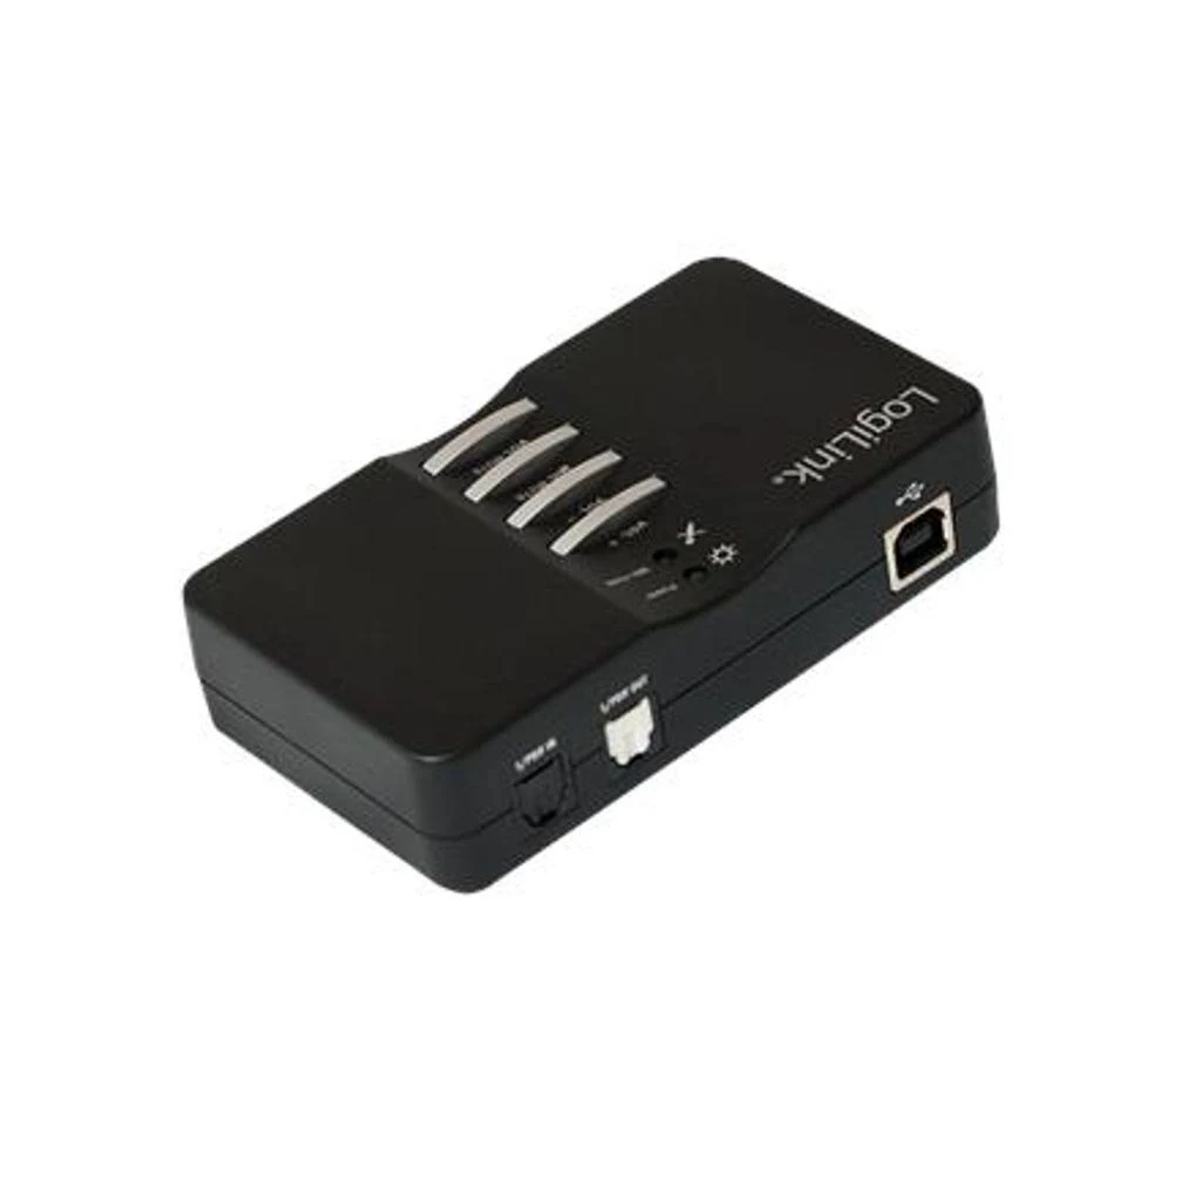 USB Soundkarte LogiLink 7.1, Soundbox Soundkarte LOGILINK 7.1